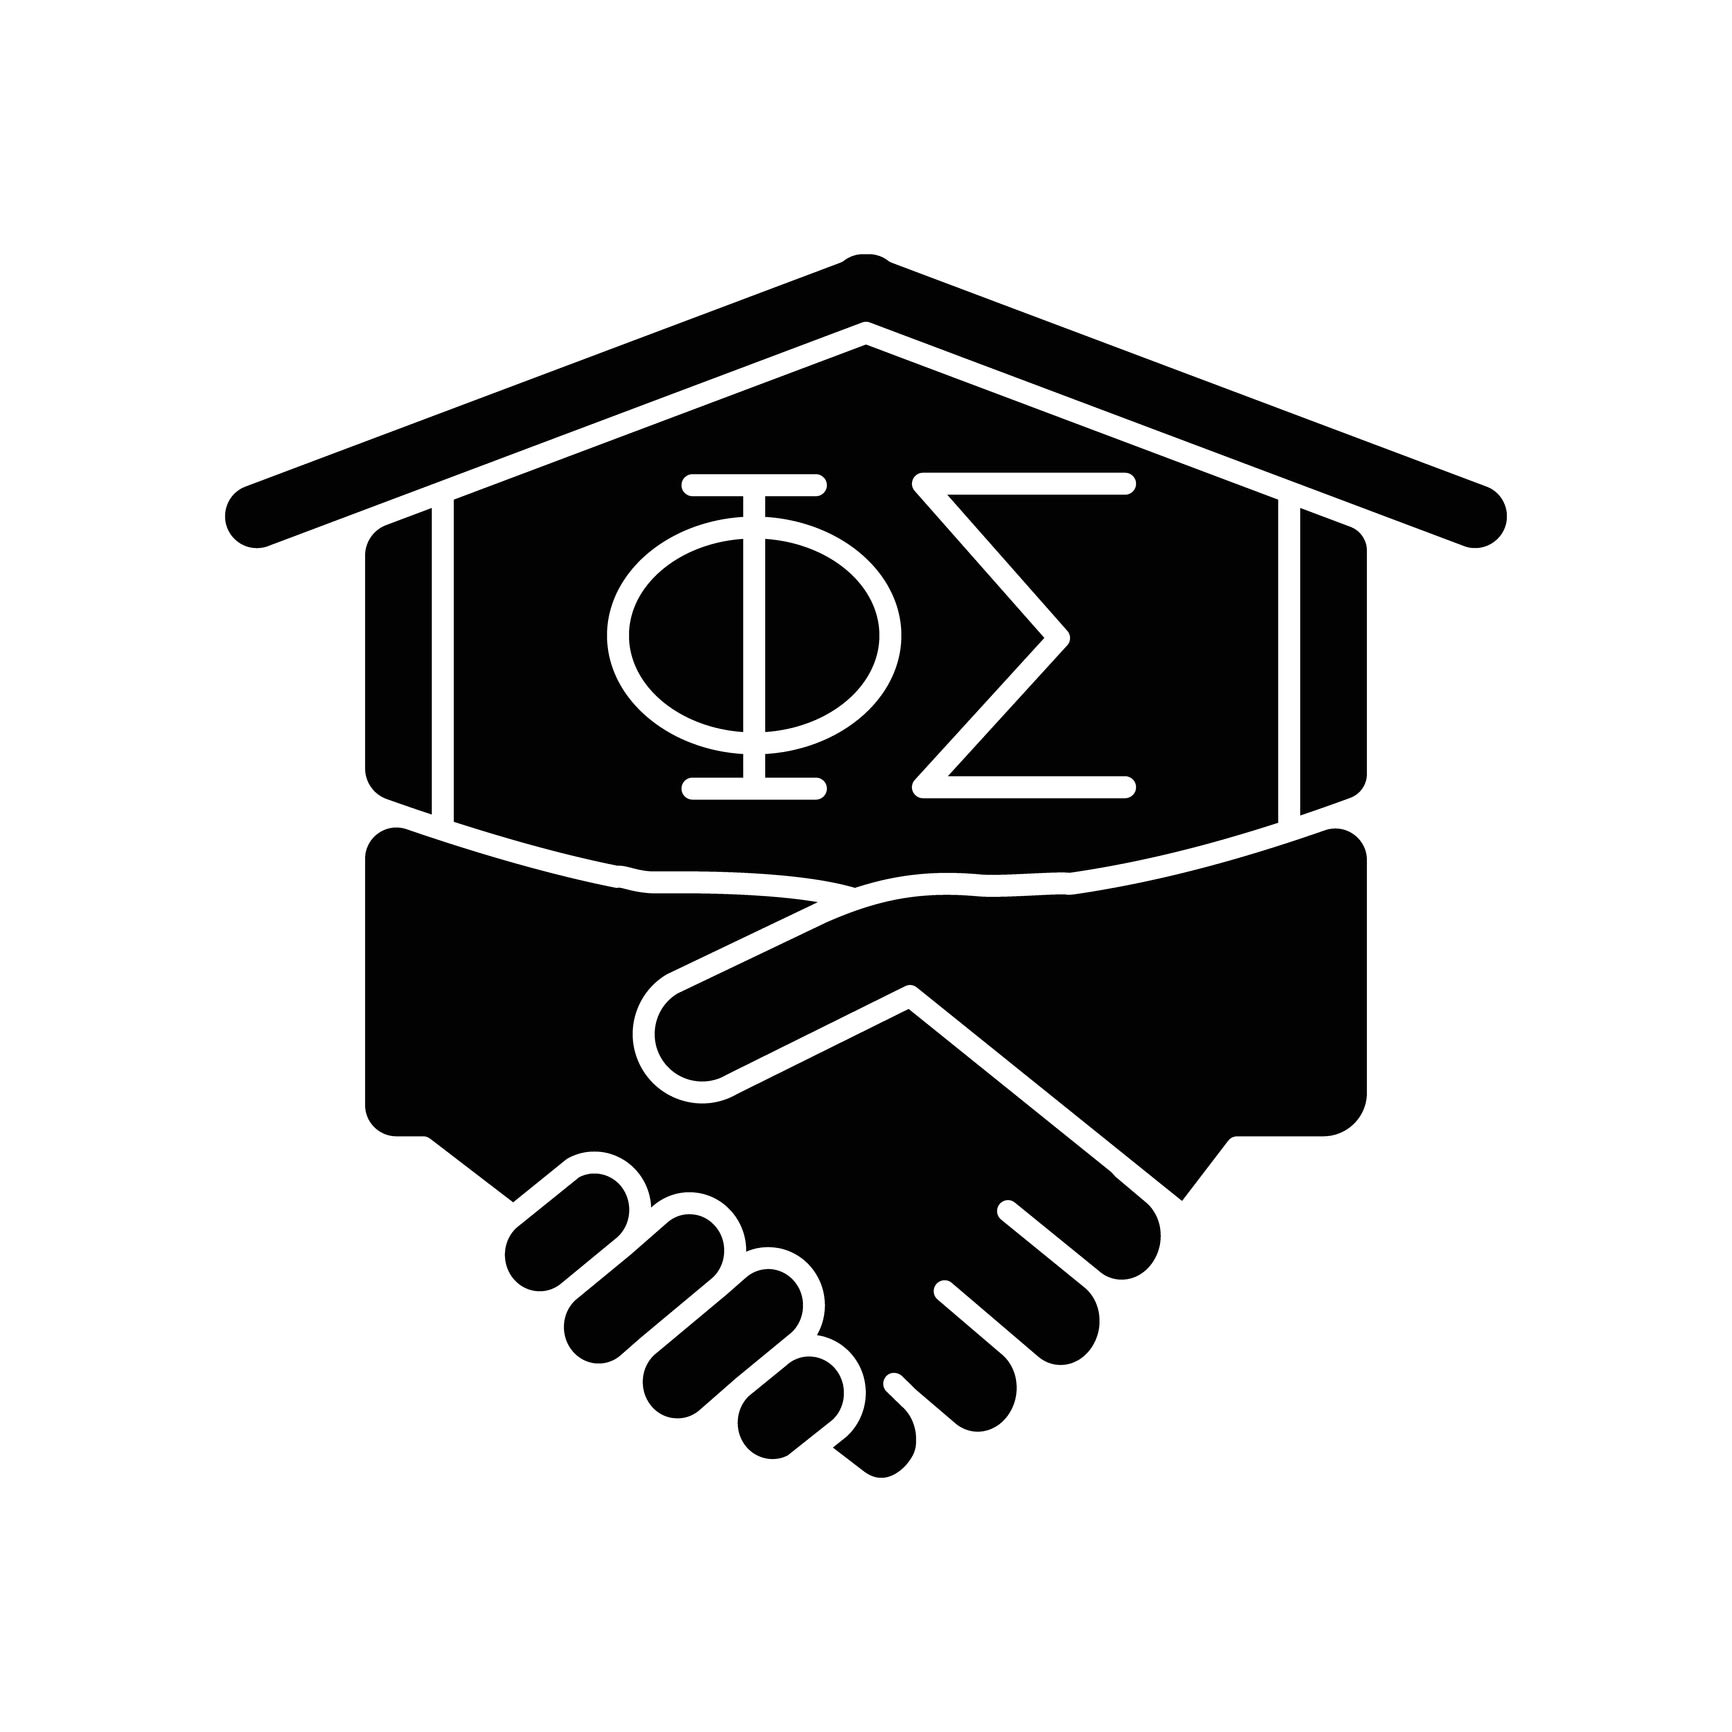 fraternity symbols